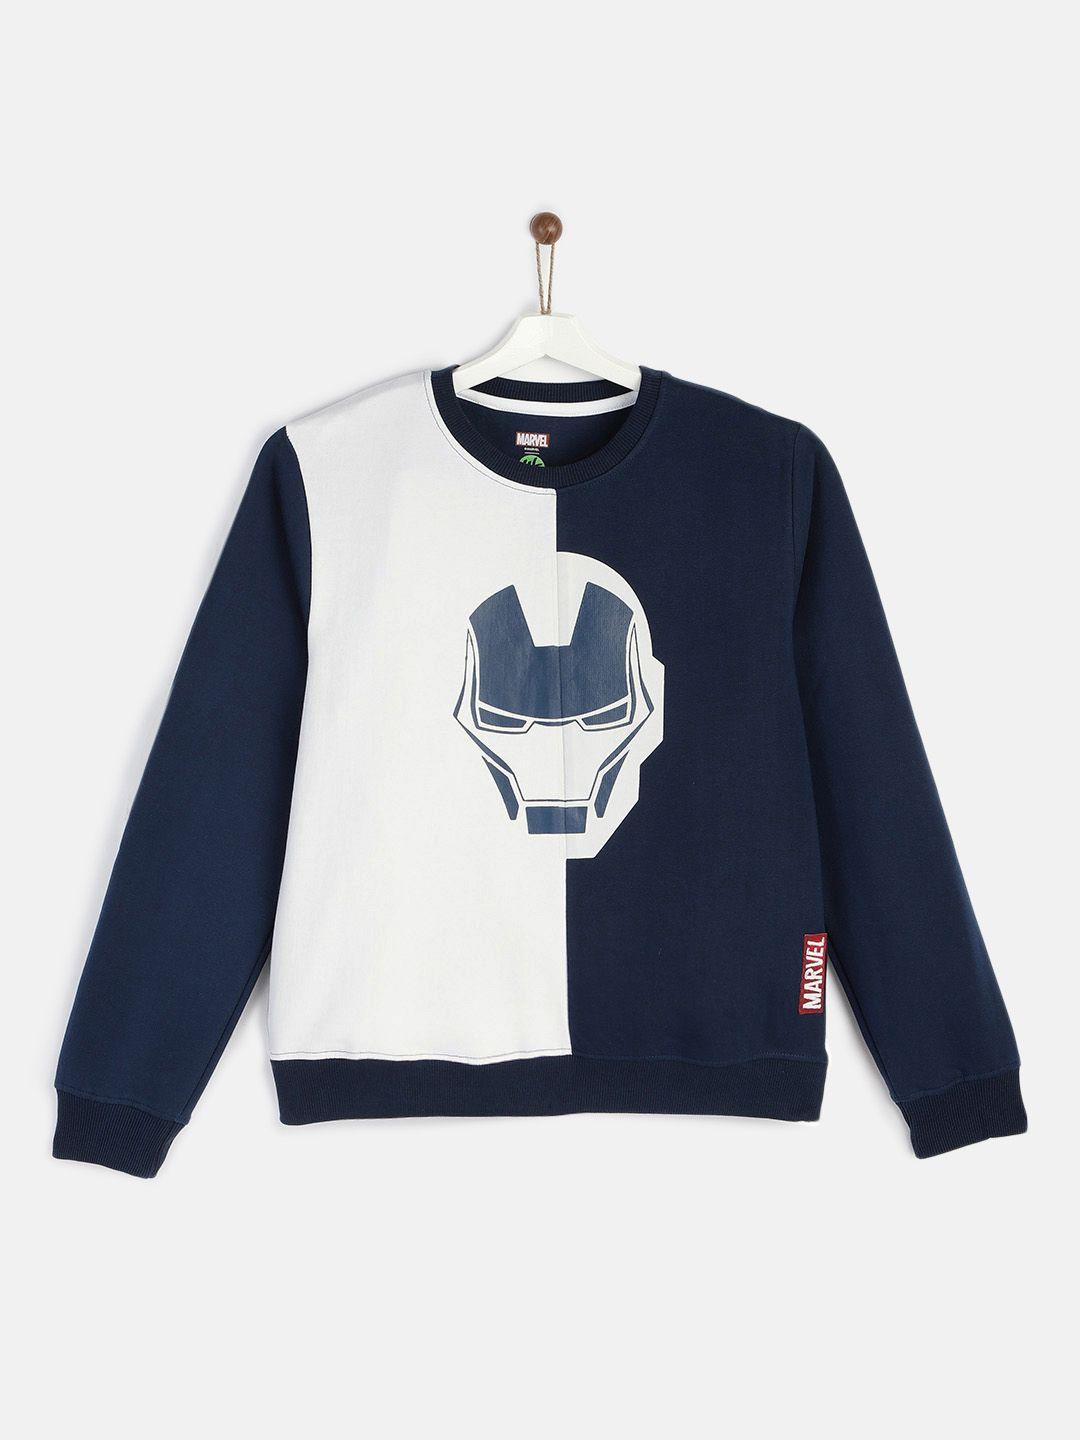 yk marvel boys navy blue & white colourblocked sweatshirt